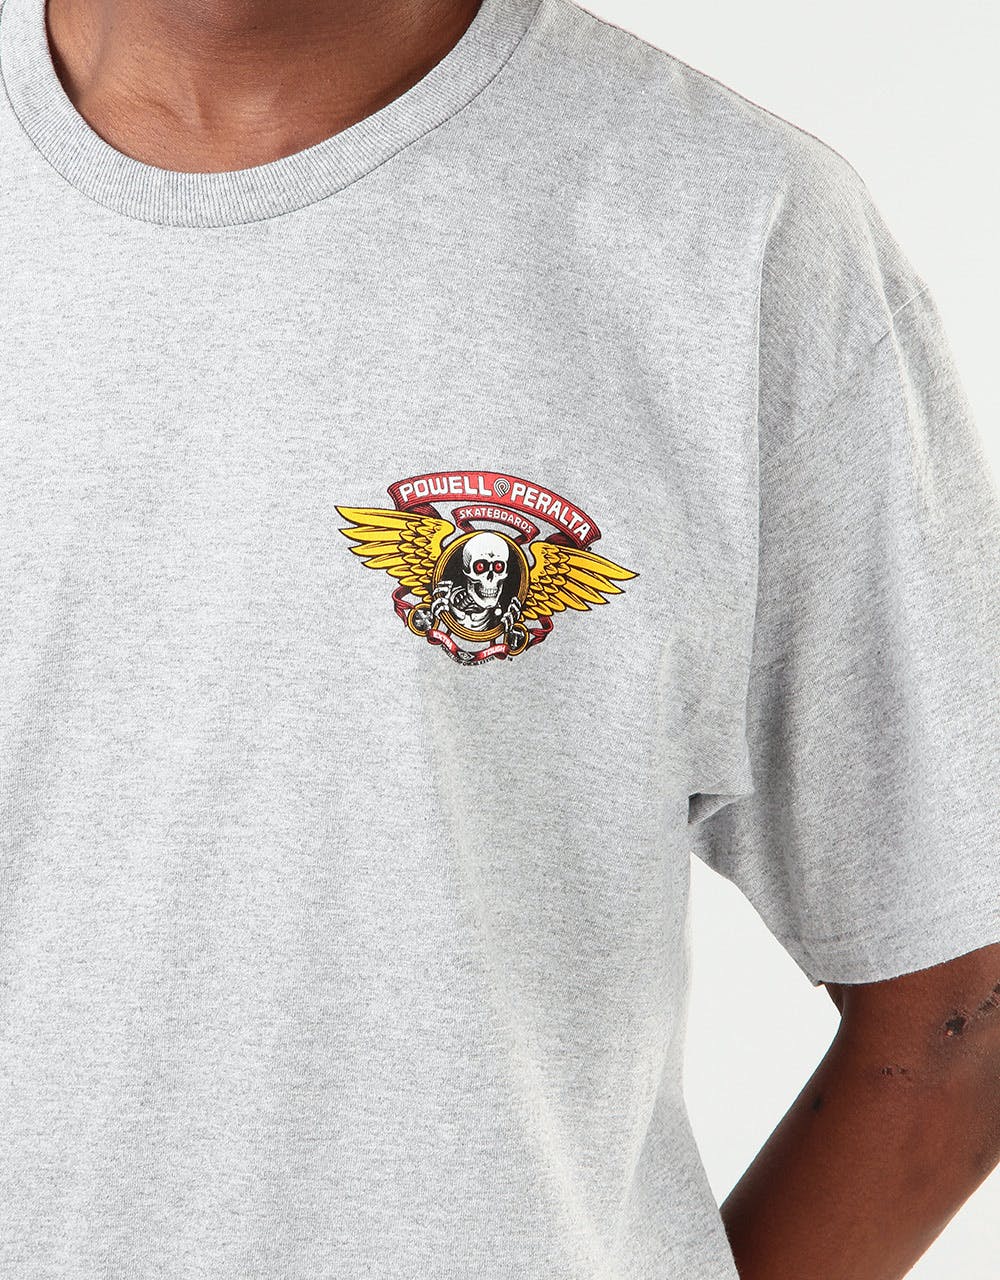 Powell Peralta Winged Ripper T-Shirt - Heather Grey